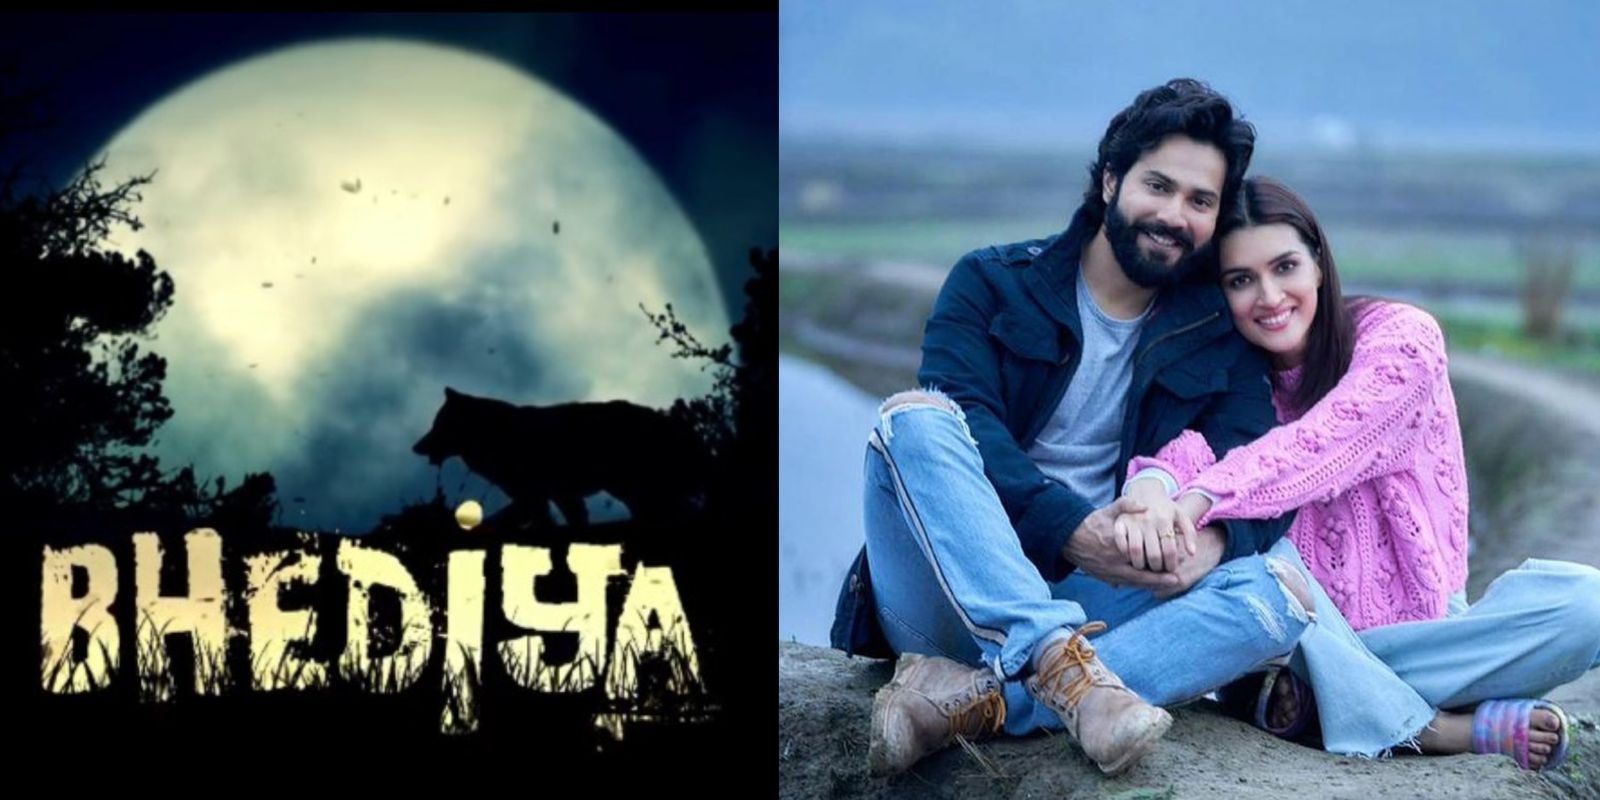 Varun Dhawan will reunite with Bhediya team this month to shoot last leg of the film